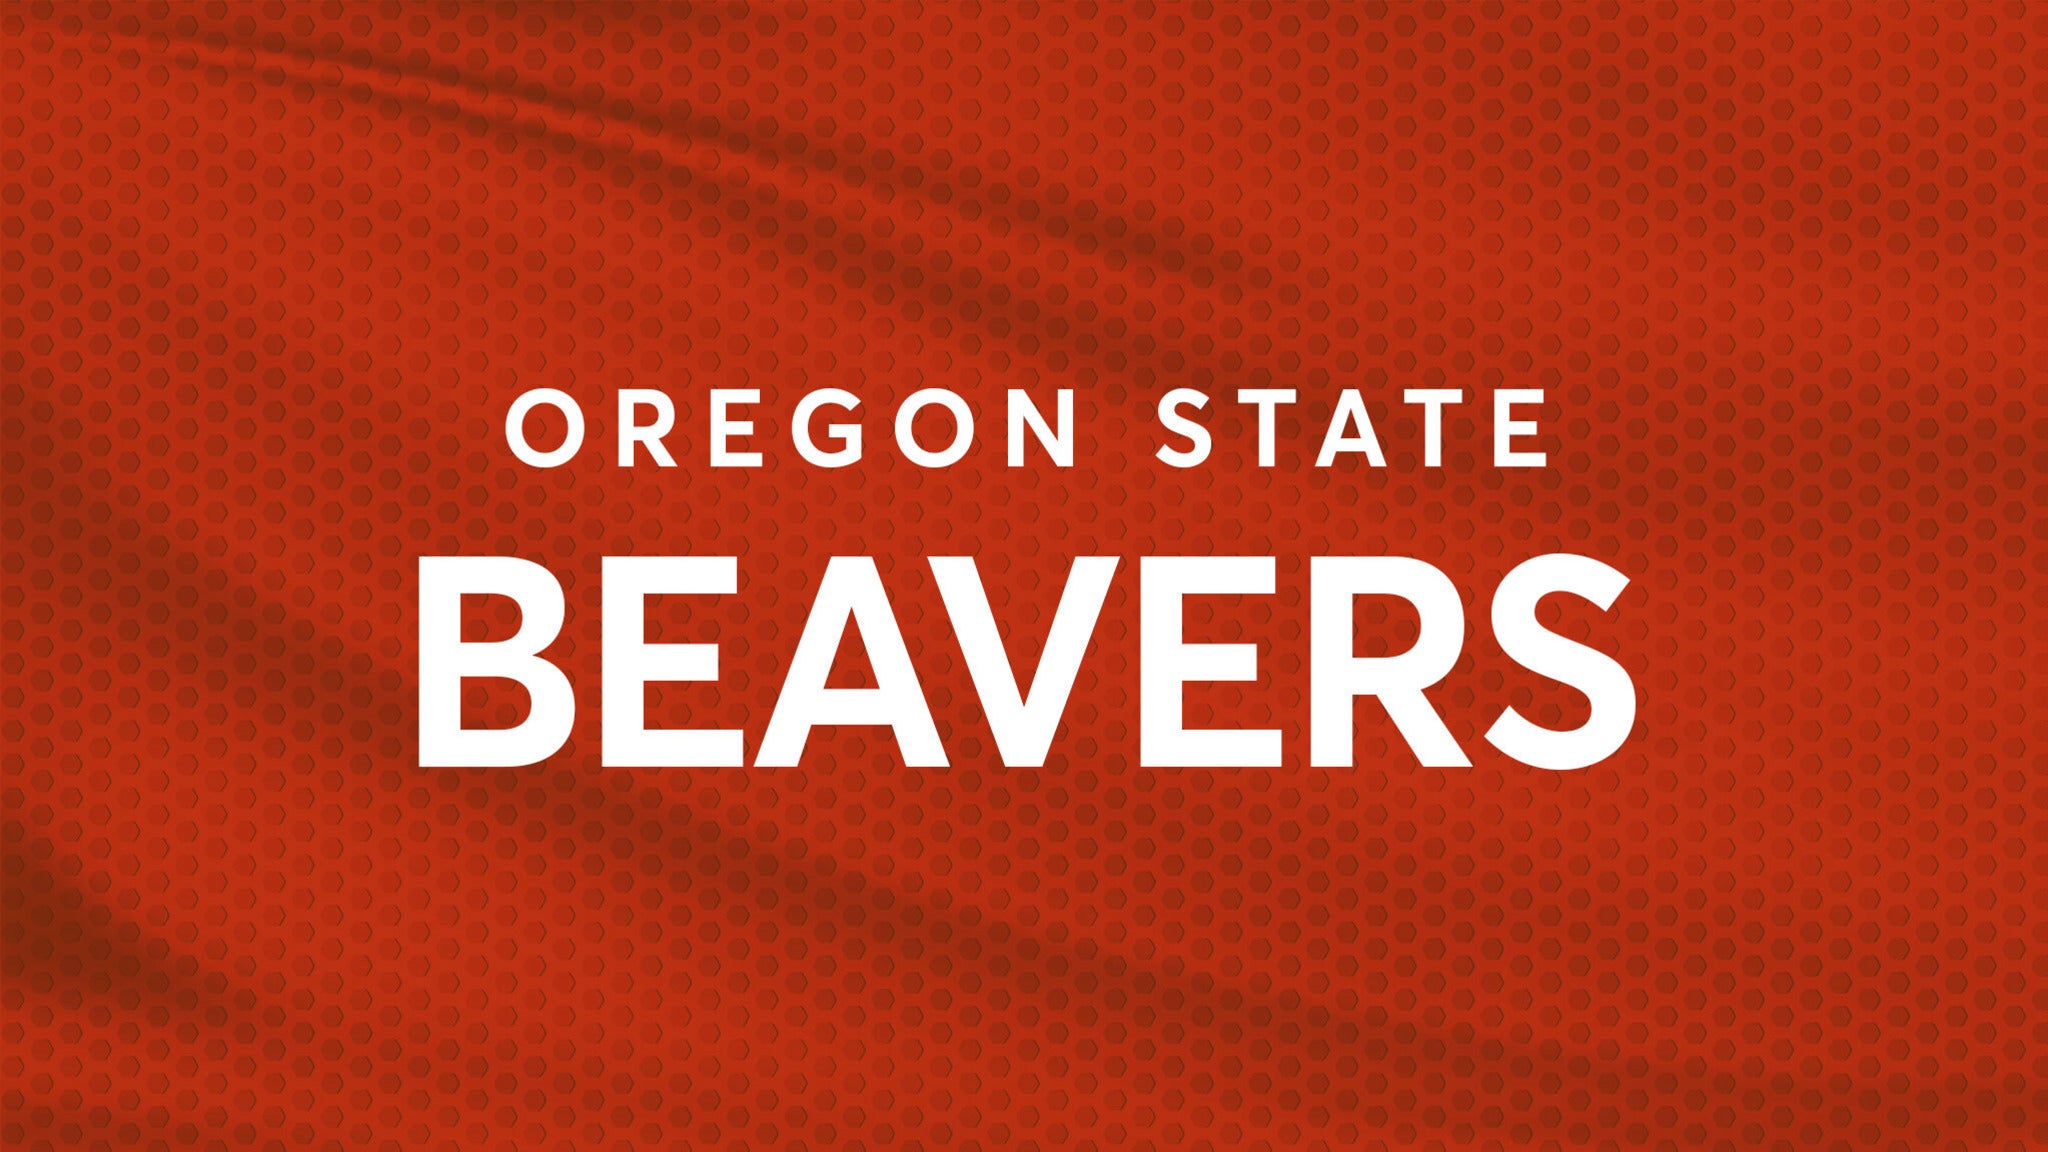 Oregon State Beavers Womens Soccer presale information on freepresalepasswords.com